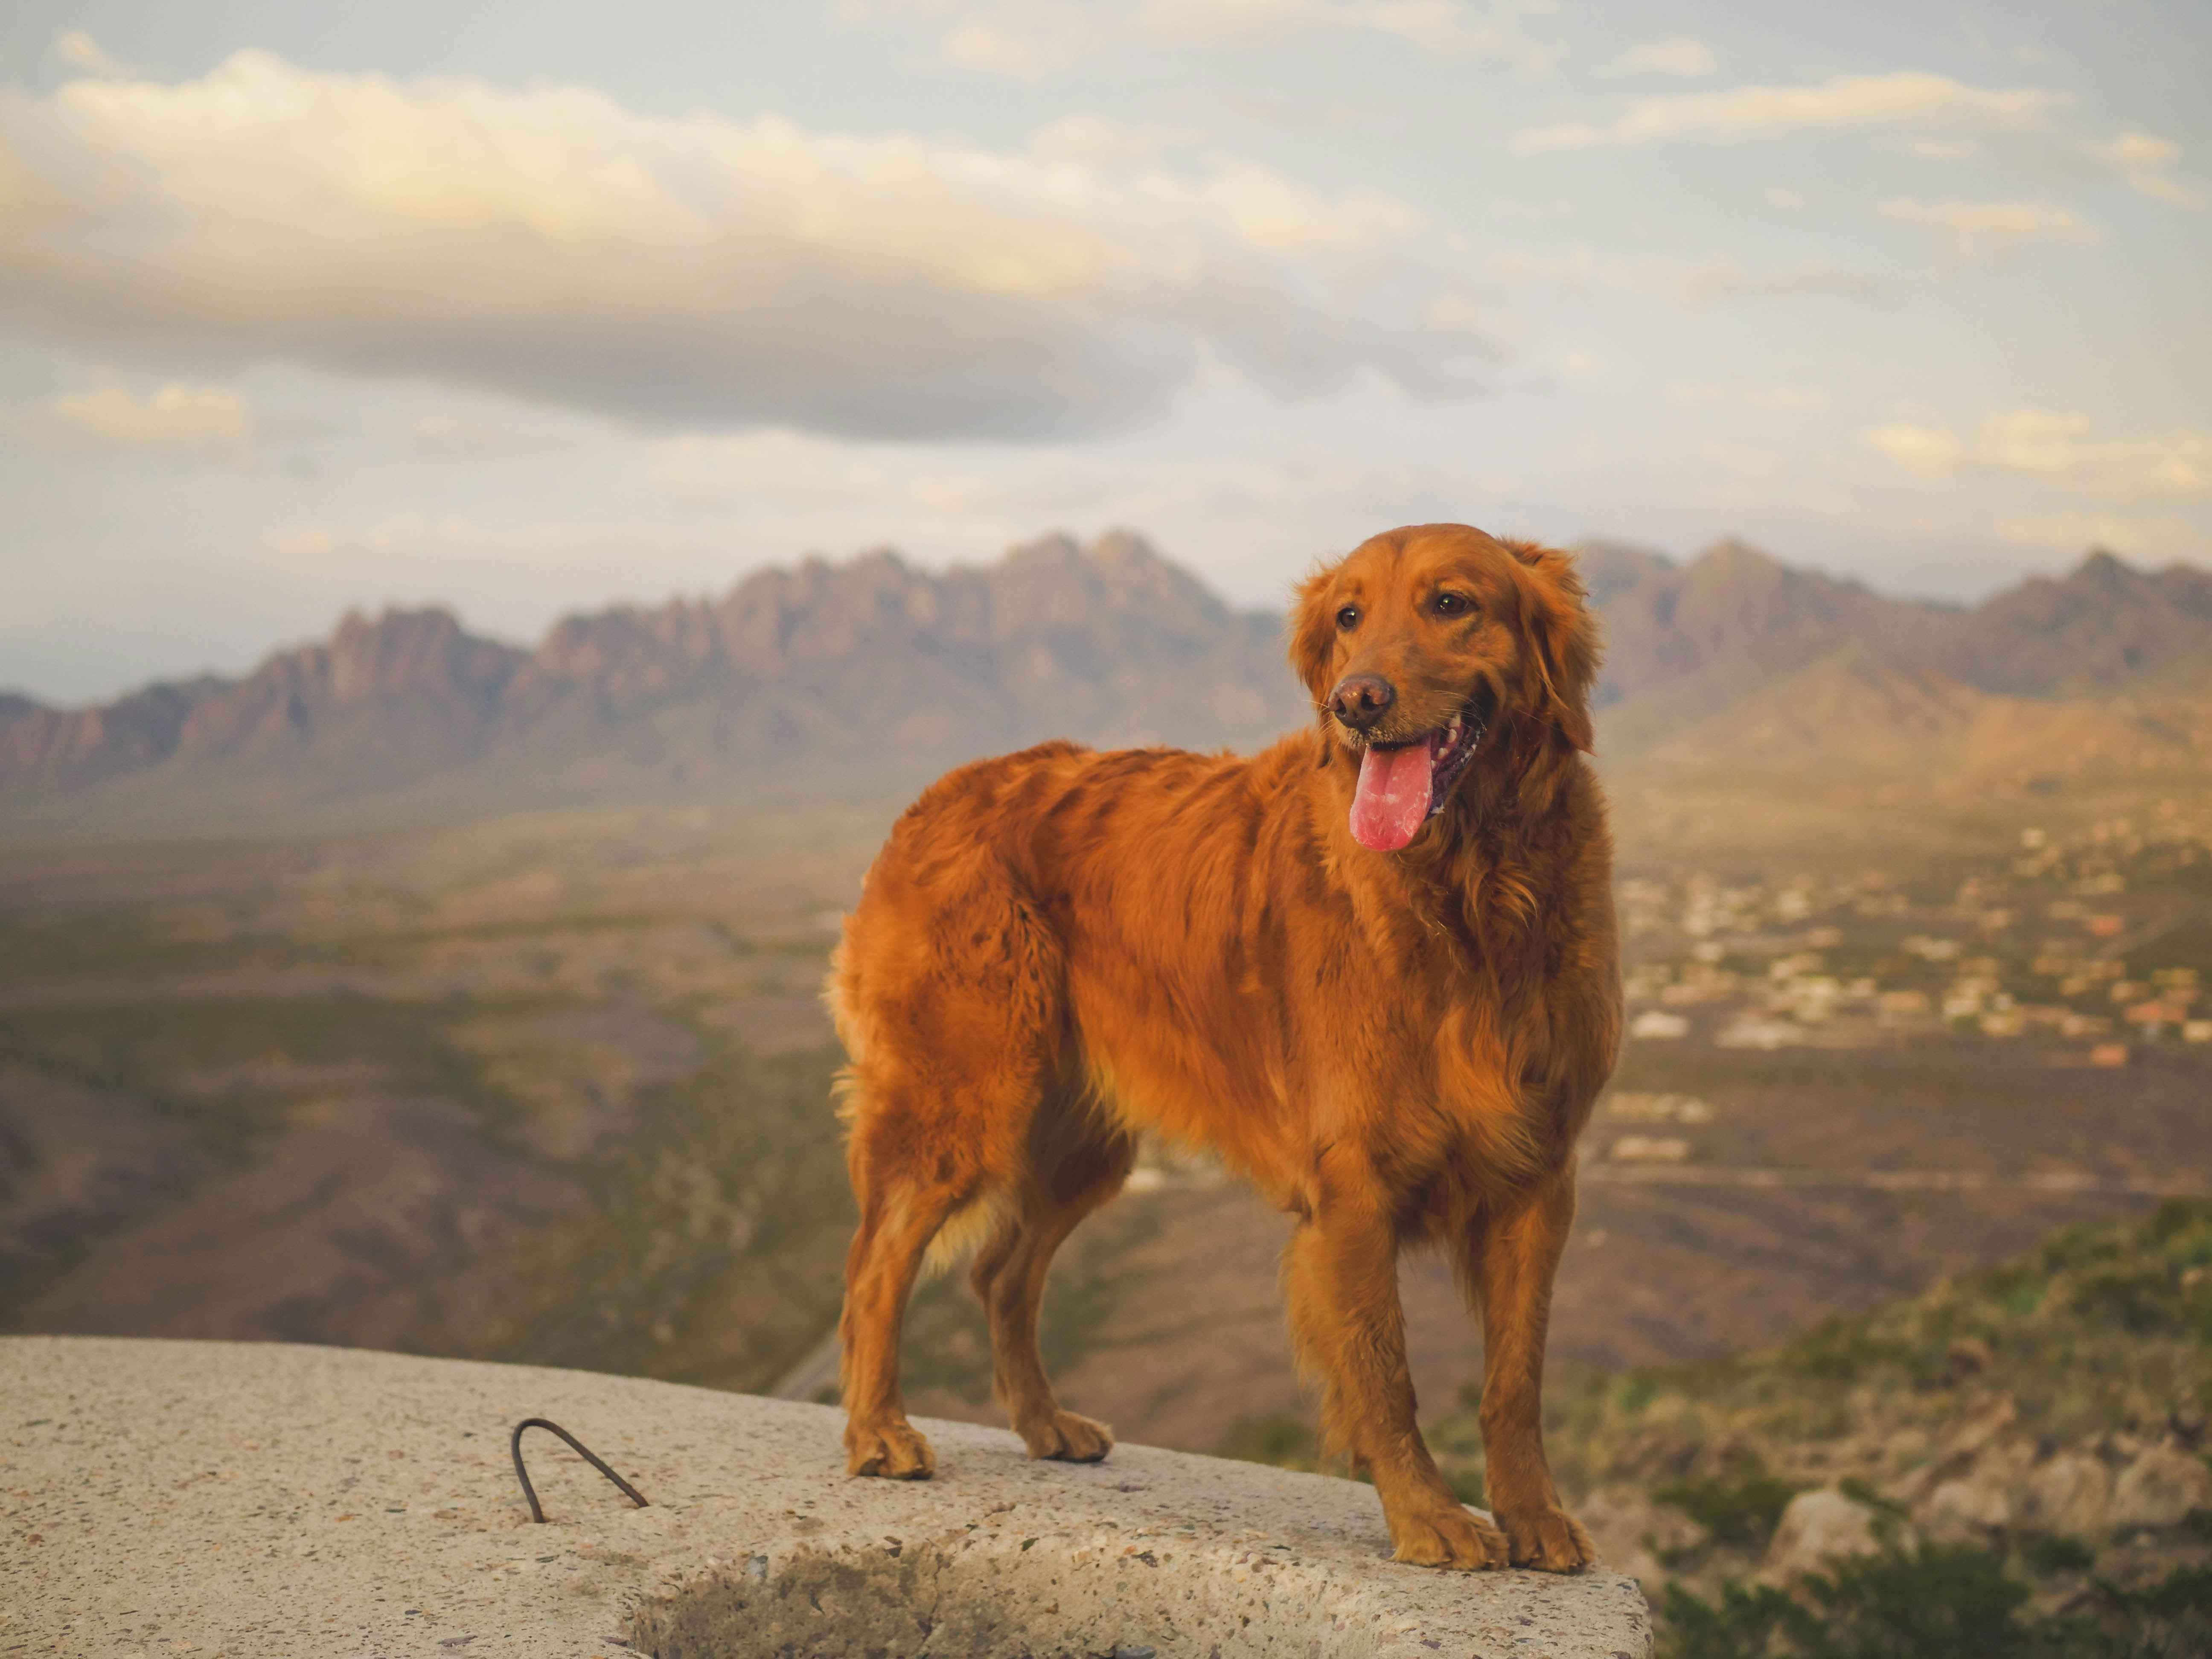 Are Golden Retrievers good guard dogs?